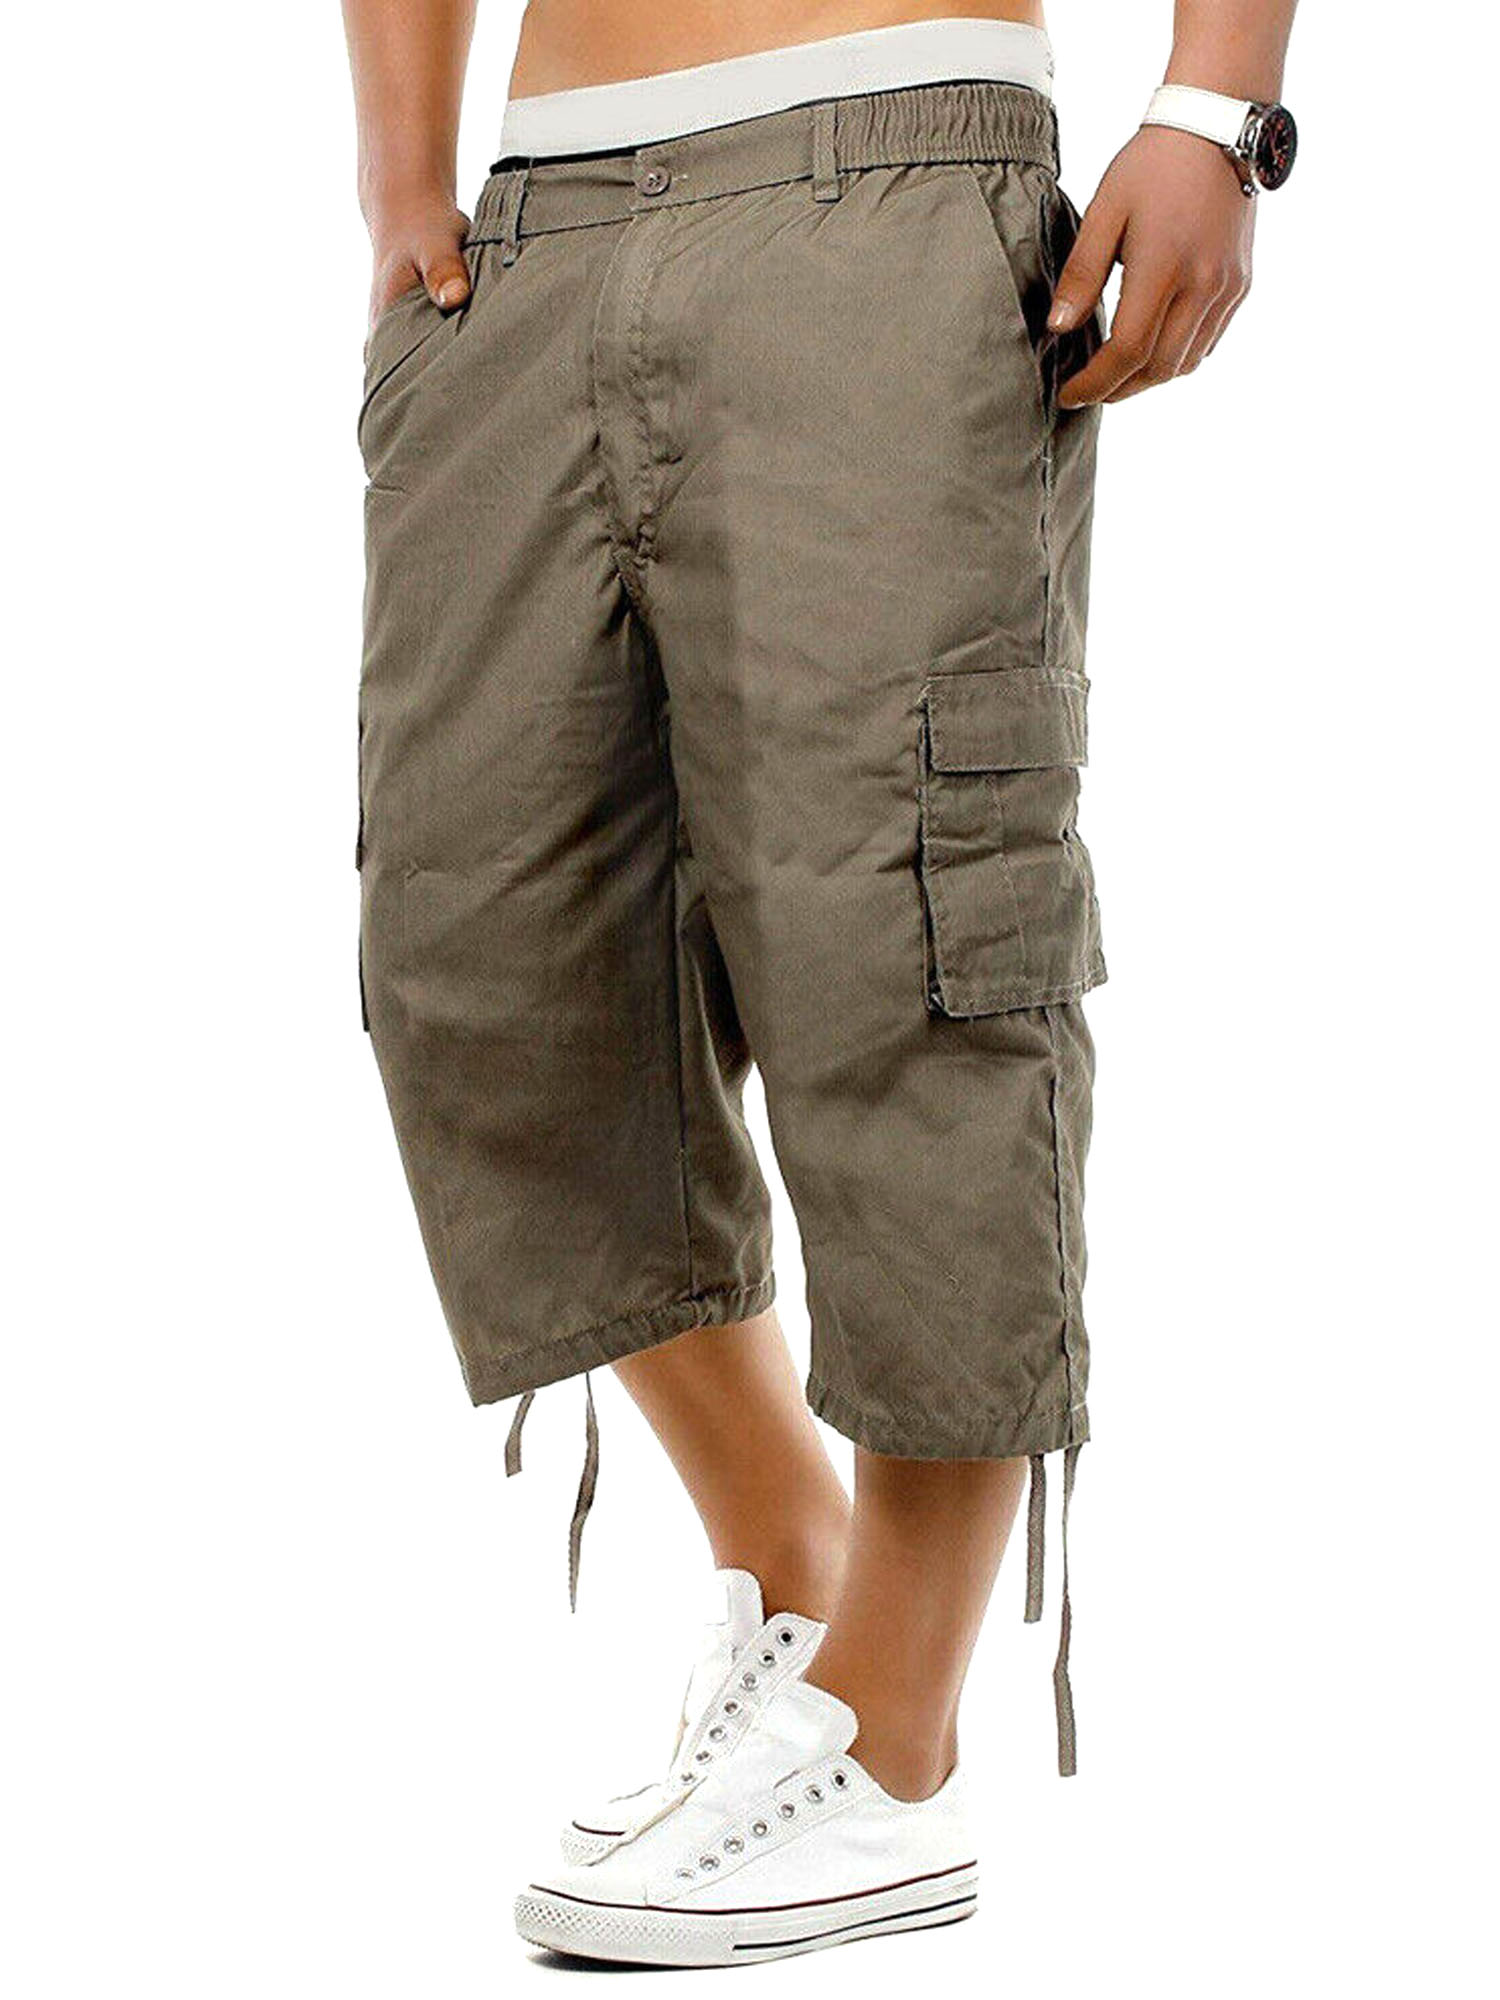 VtuAOL Mens Outdoor Quick Dry Capri 3/4 Cropped Pants Hiking Cargo Long Shorts 